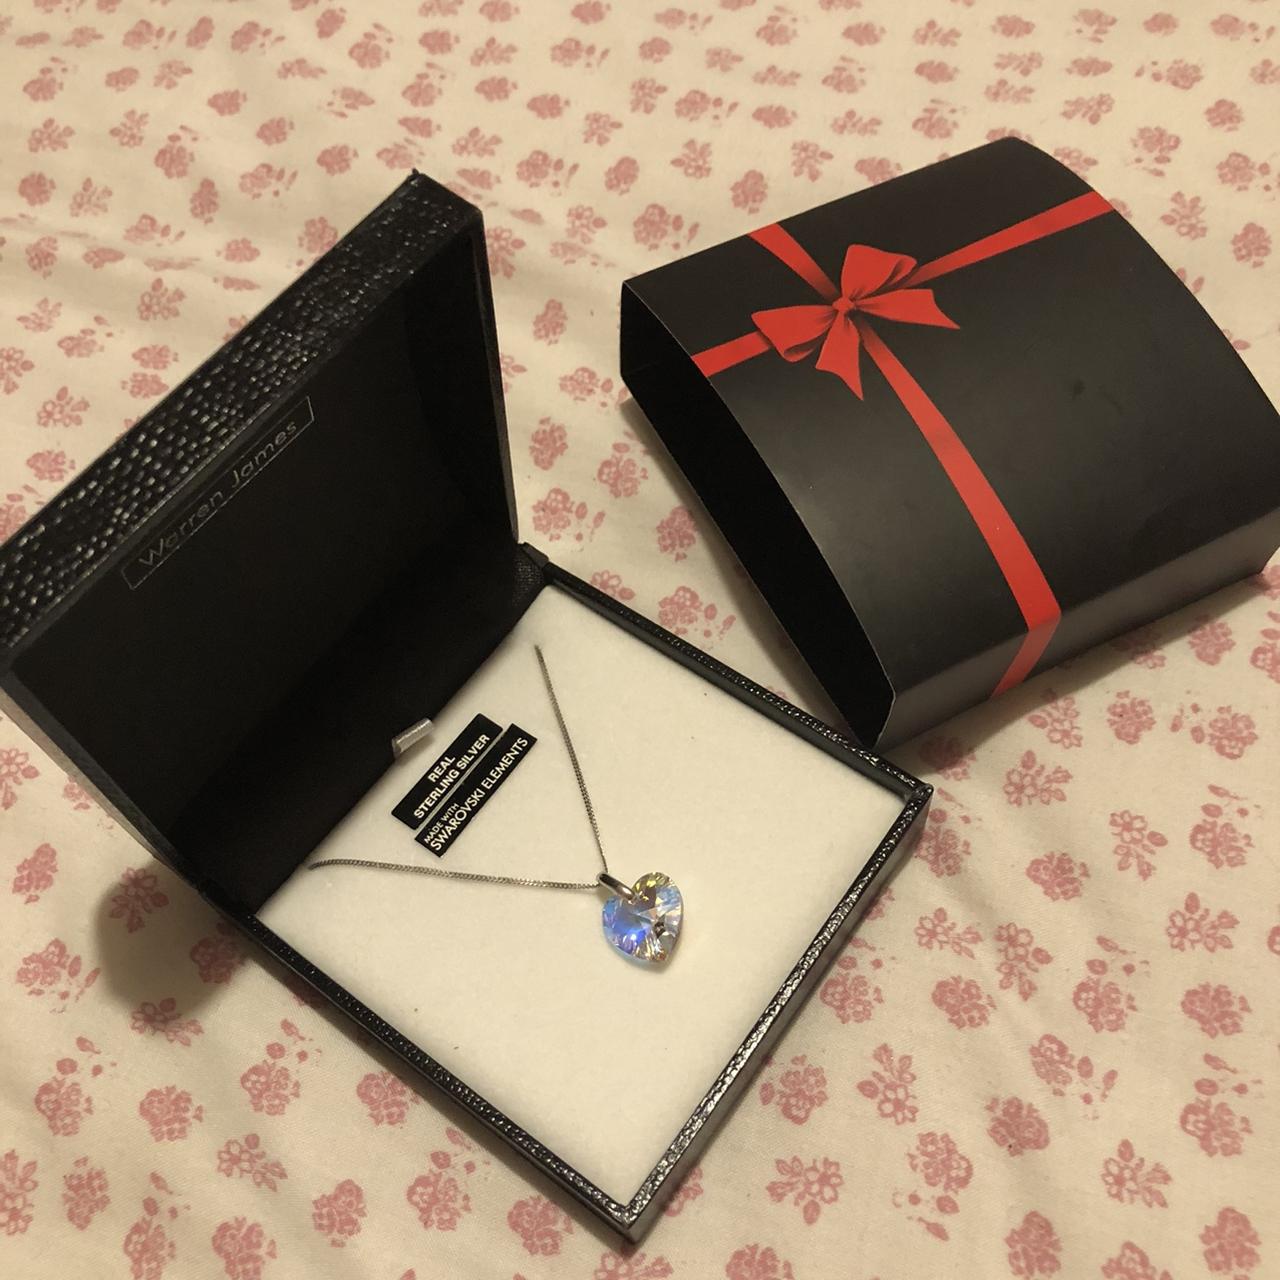 WARREN JAMES SABRINA Heart Necklace BRAND NEW IN BOX £19.99 - PicClick UK